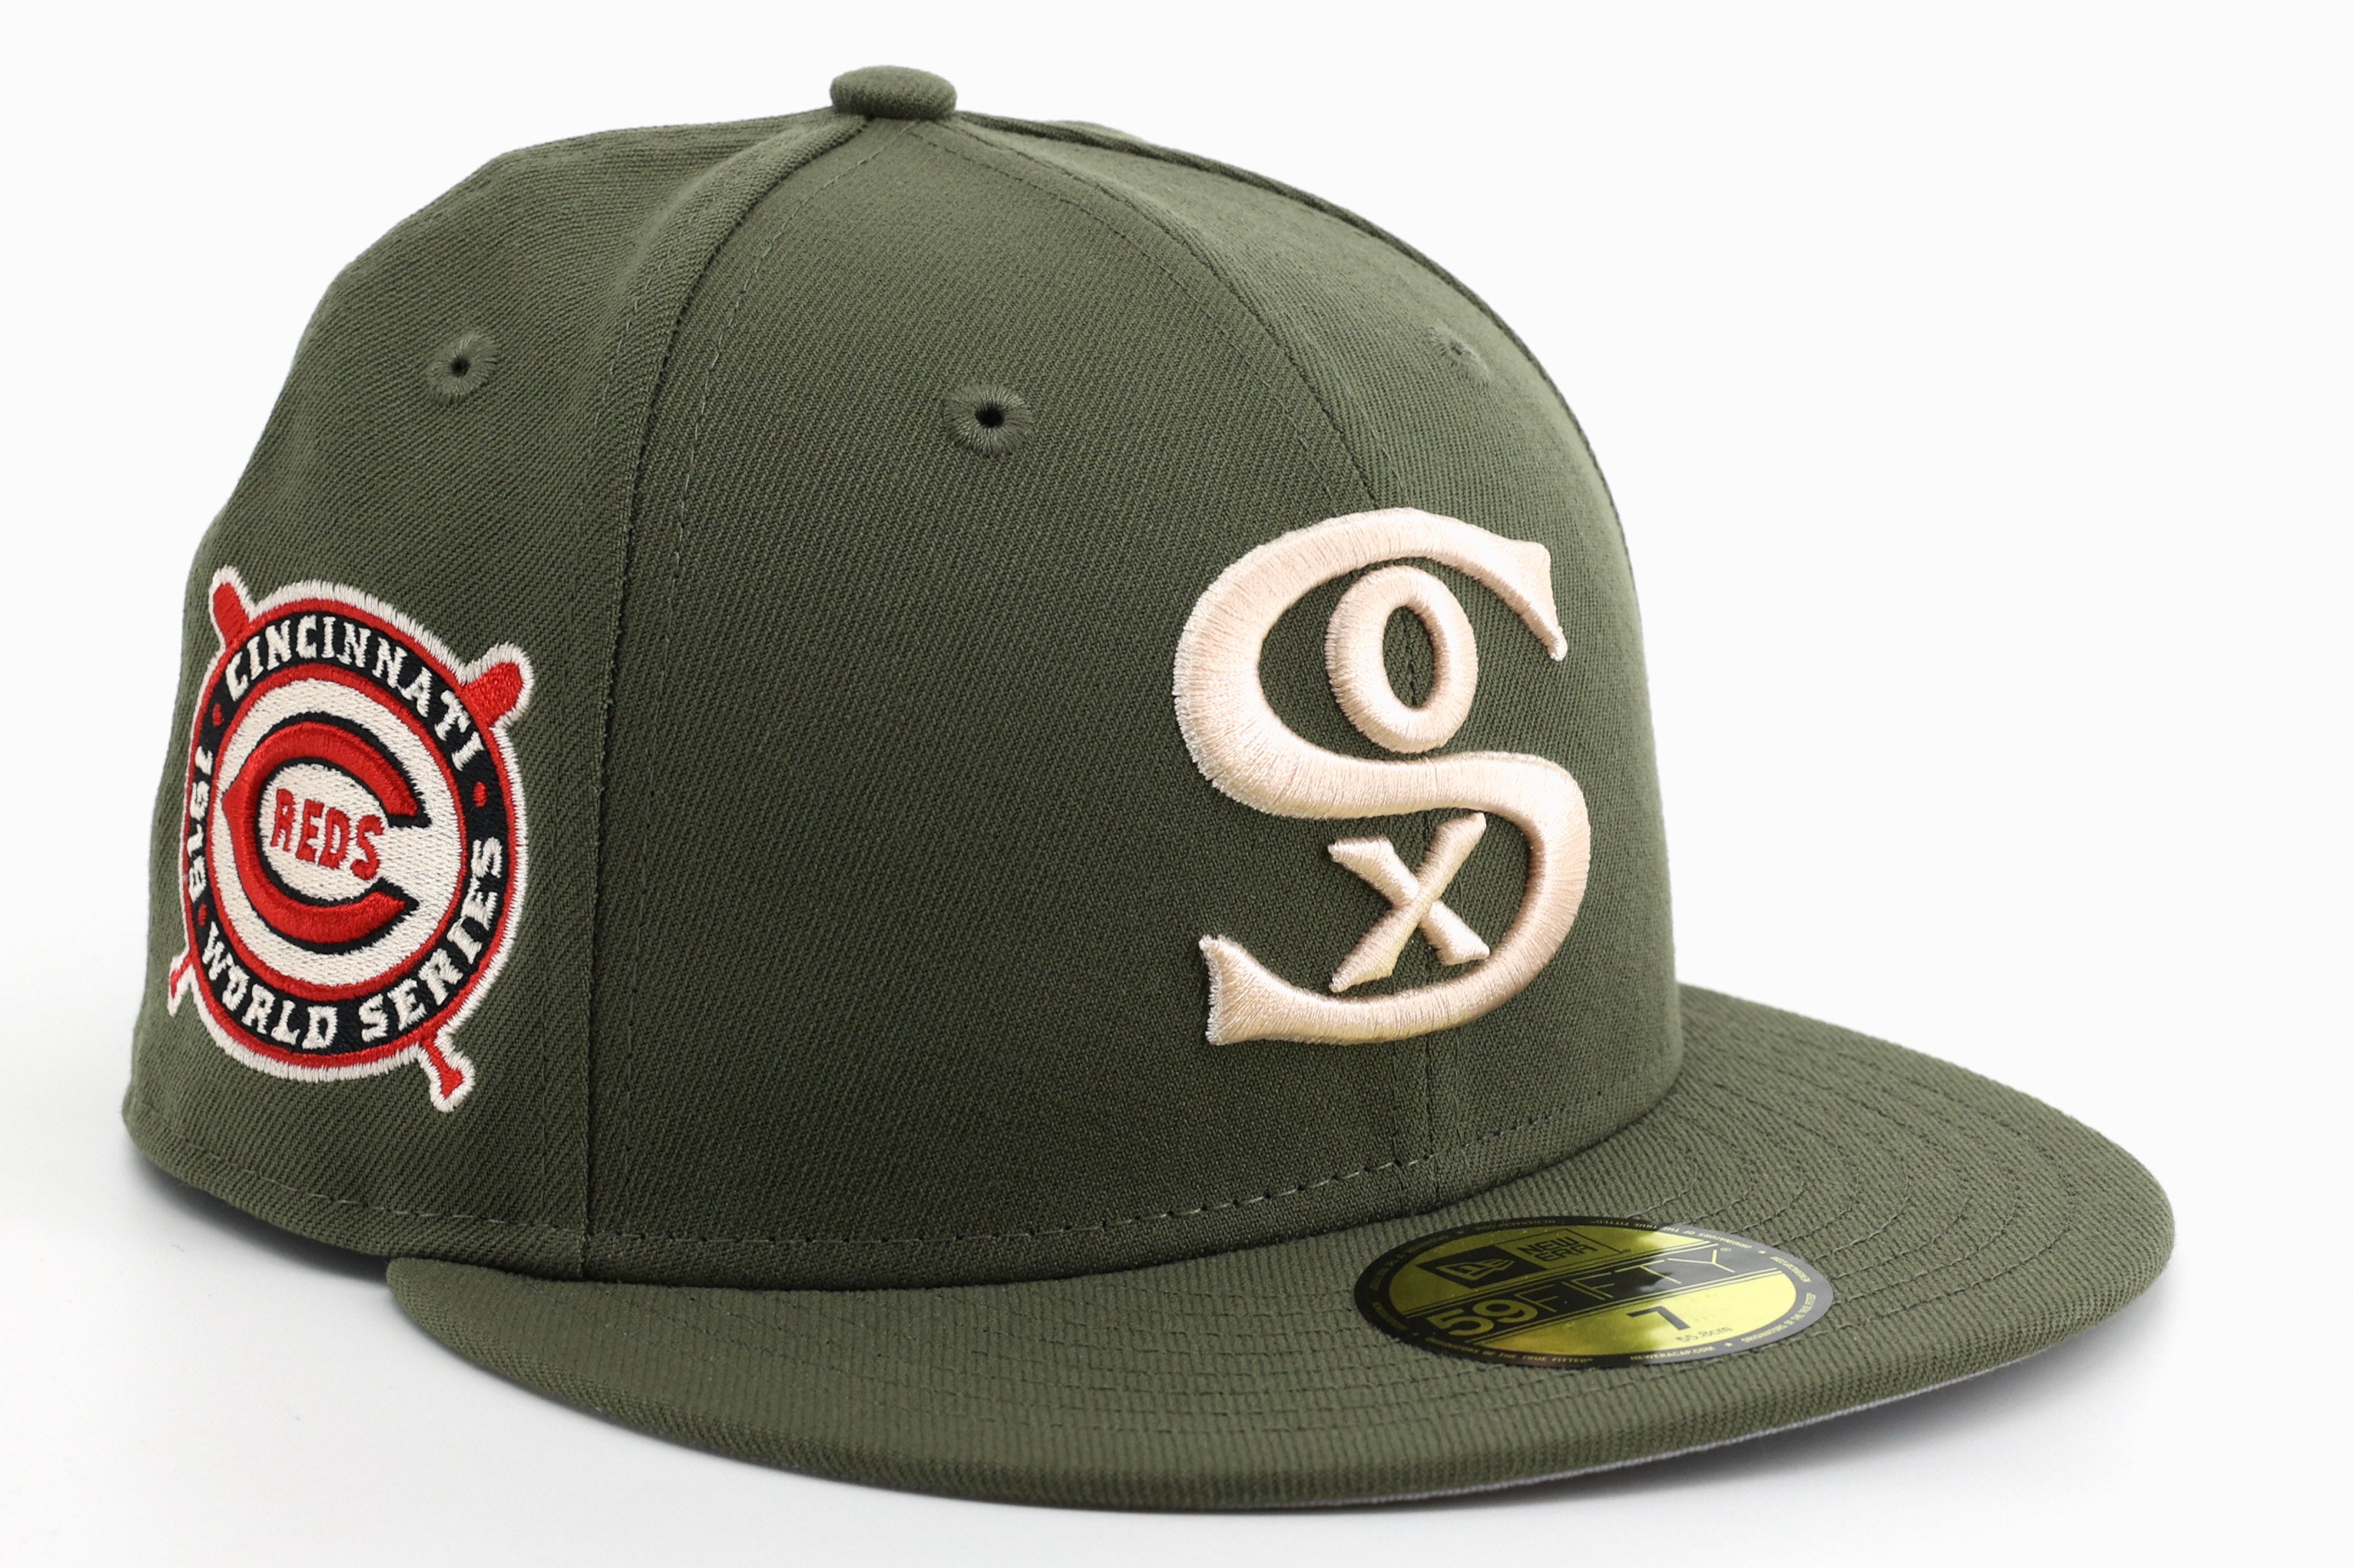 sox world series hat